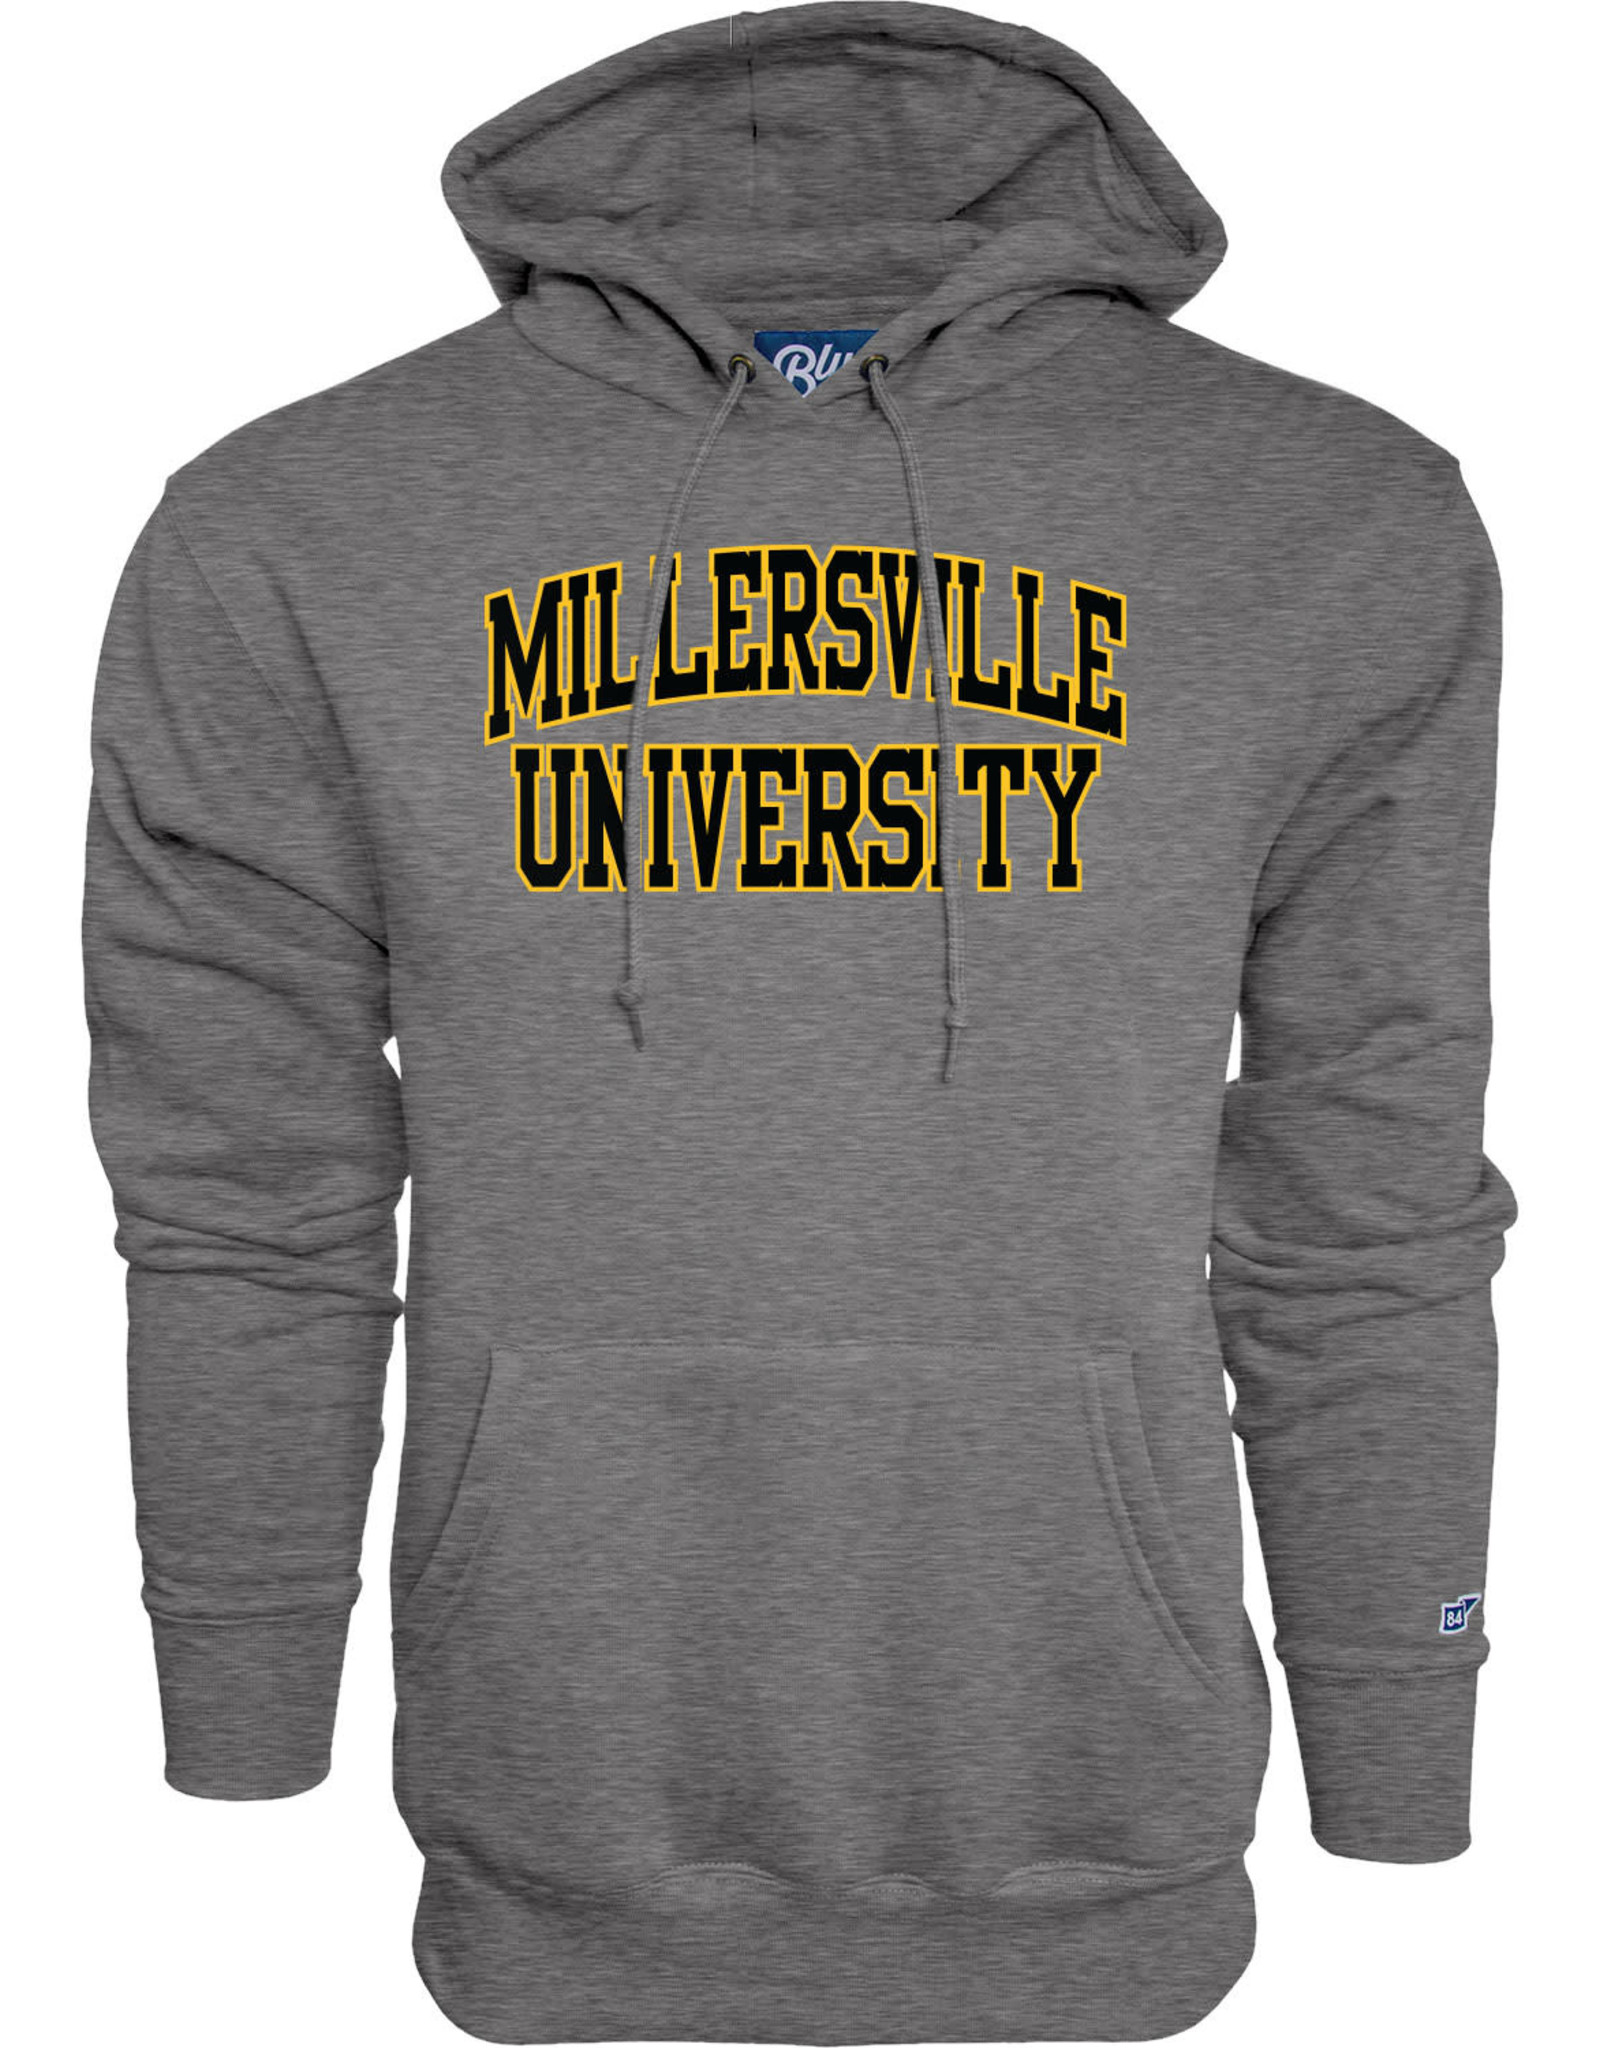 Premium Graphite Millersville University Hood with Applique